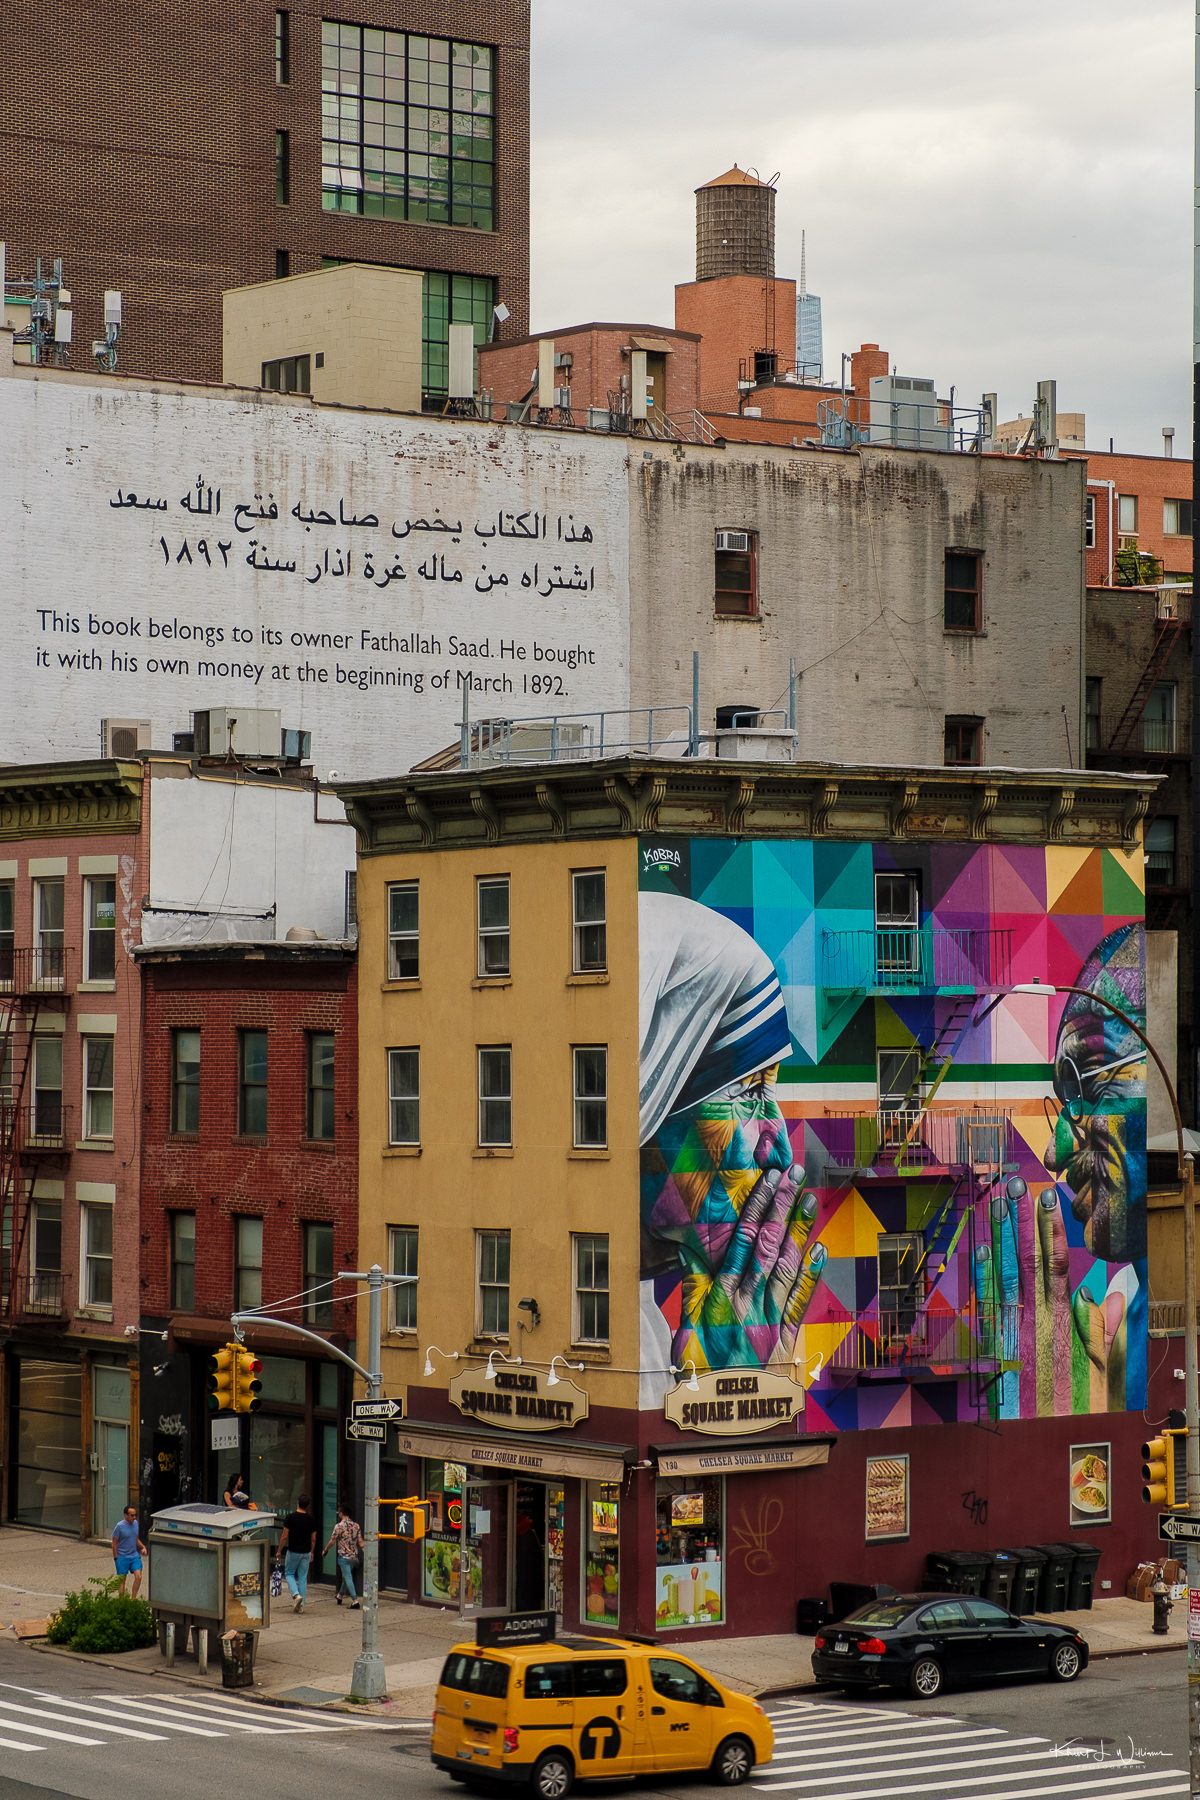 mural near The High Line, New York City